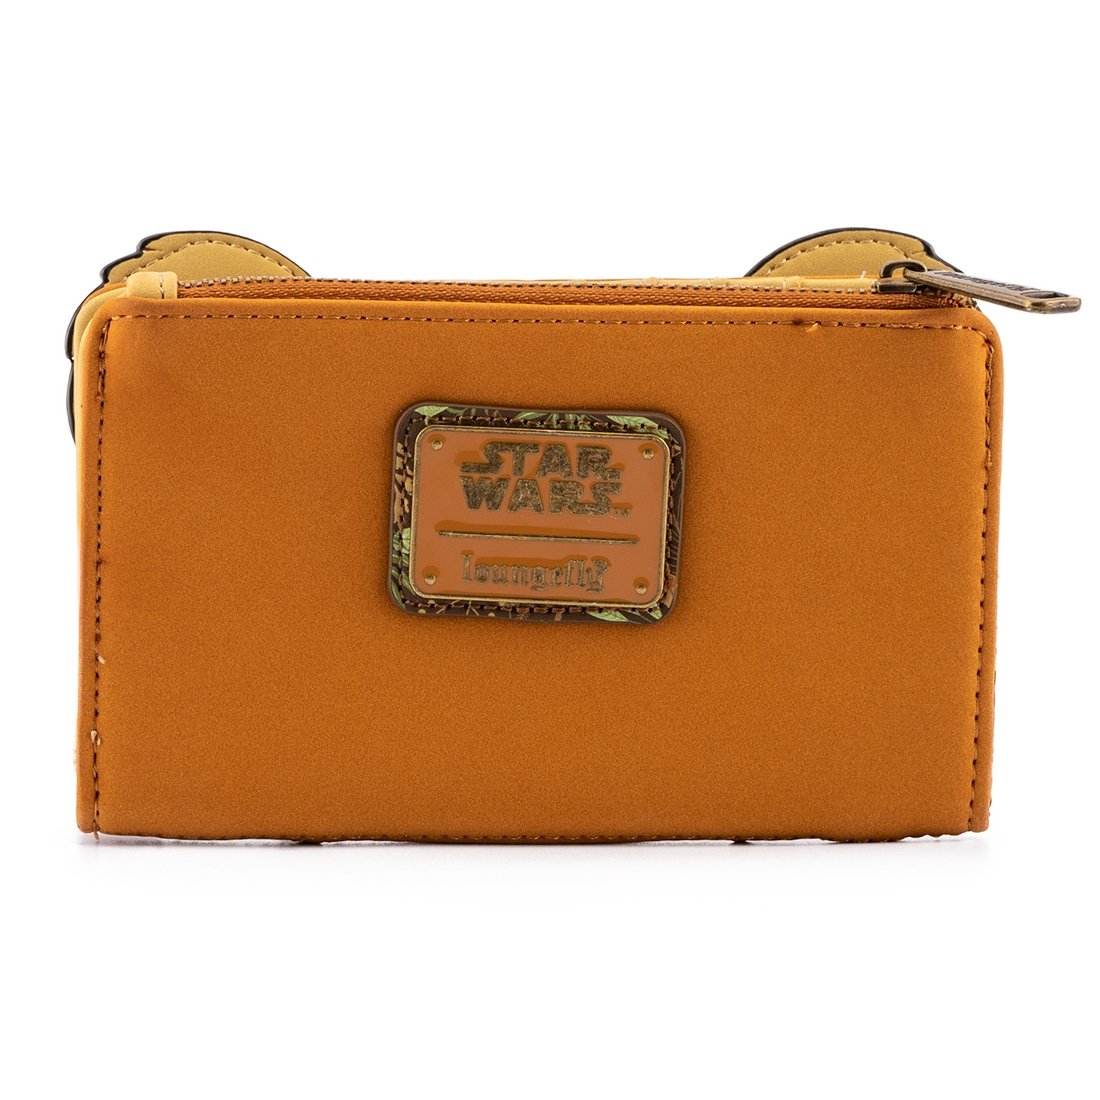 Star Wars Wicket Cosplay Wallet - Rockamilly-Bags & Purses-Vintage